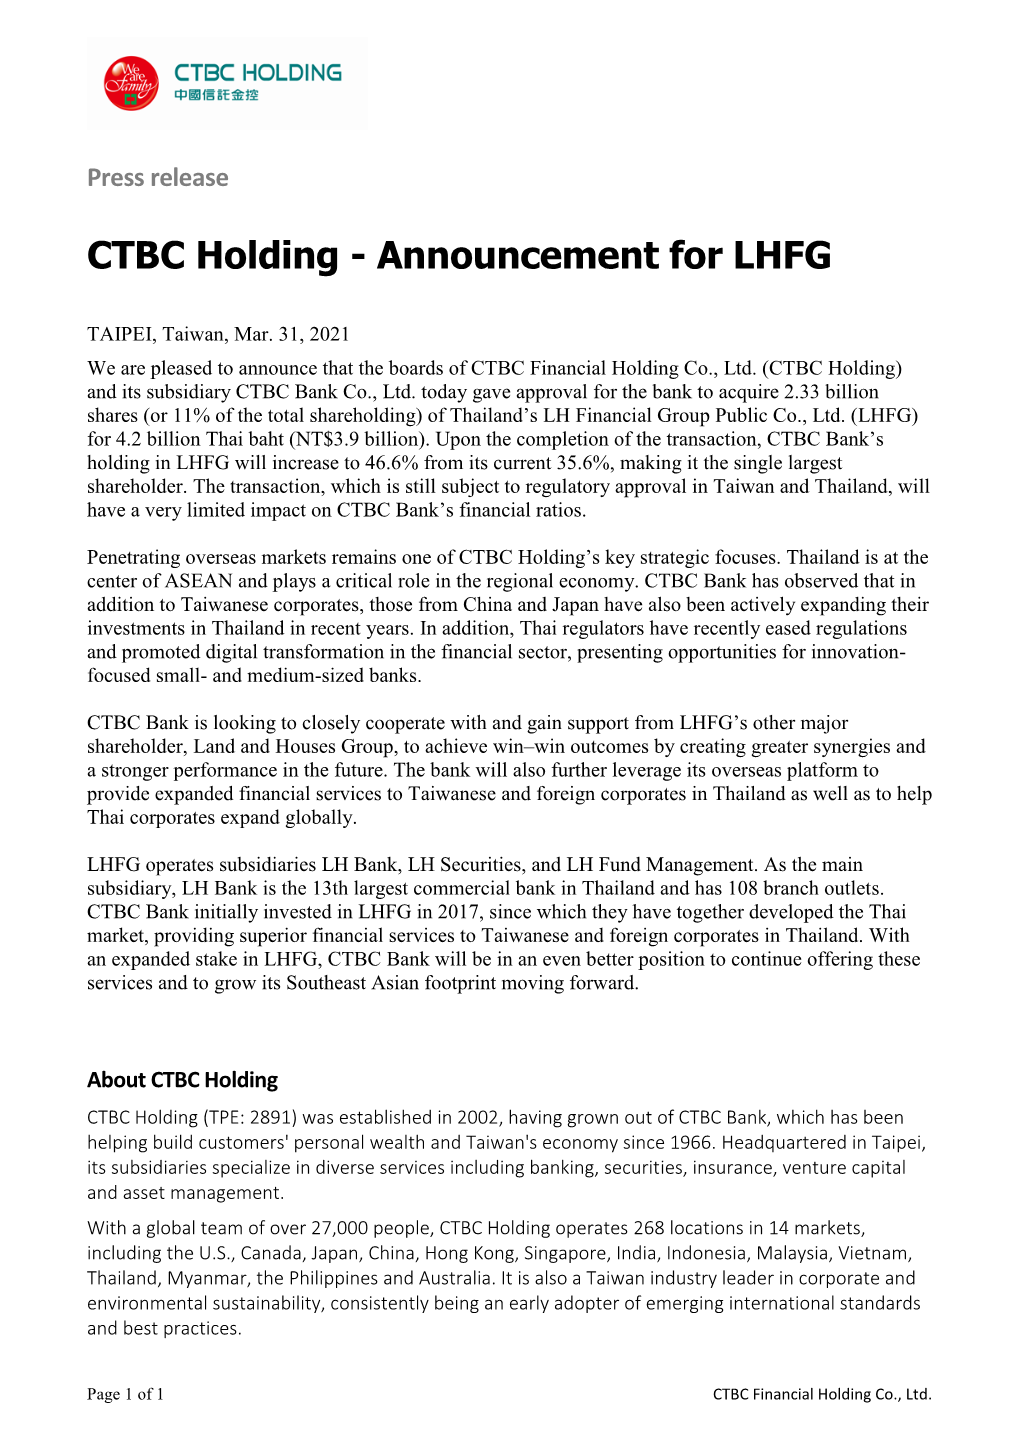 CTBC Holding - Announcement for LHFG